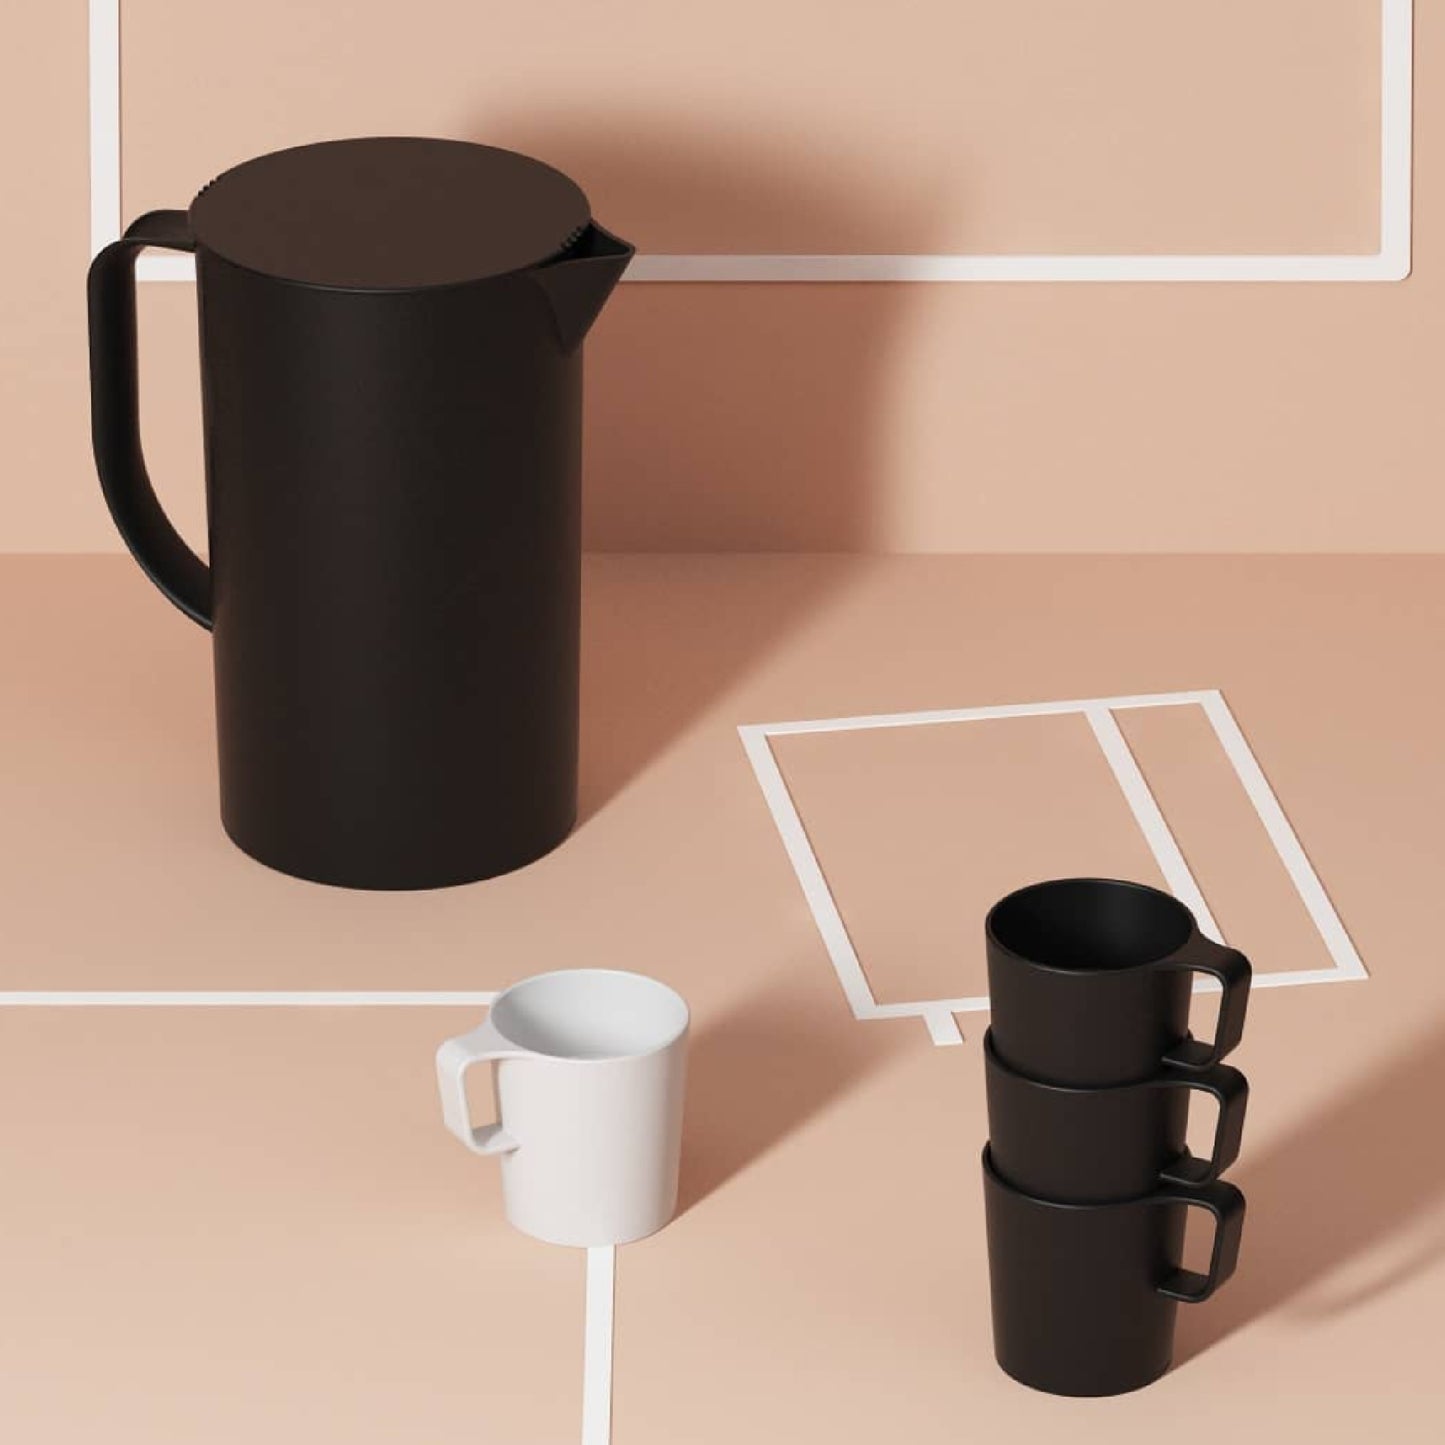 COZA Casual Plastic Mug Sets, 4 pcs